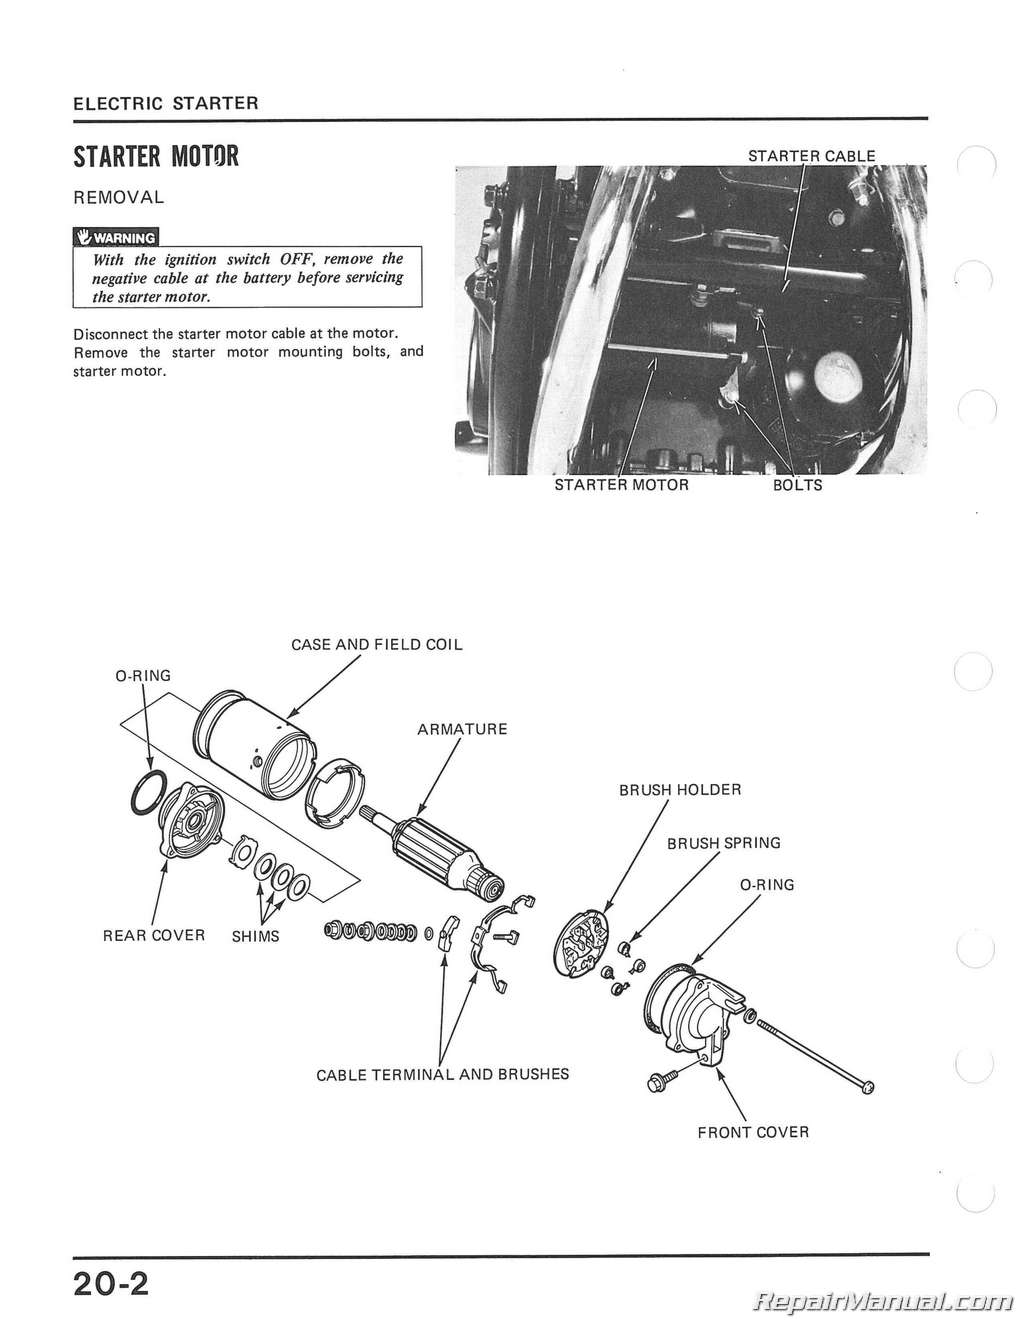 1982 Honda v45 magna service manual